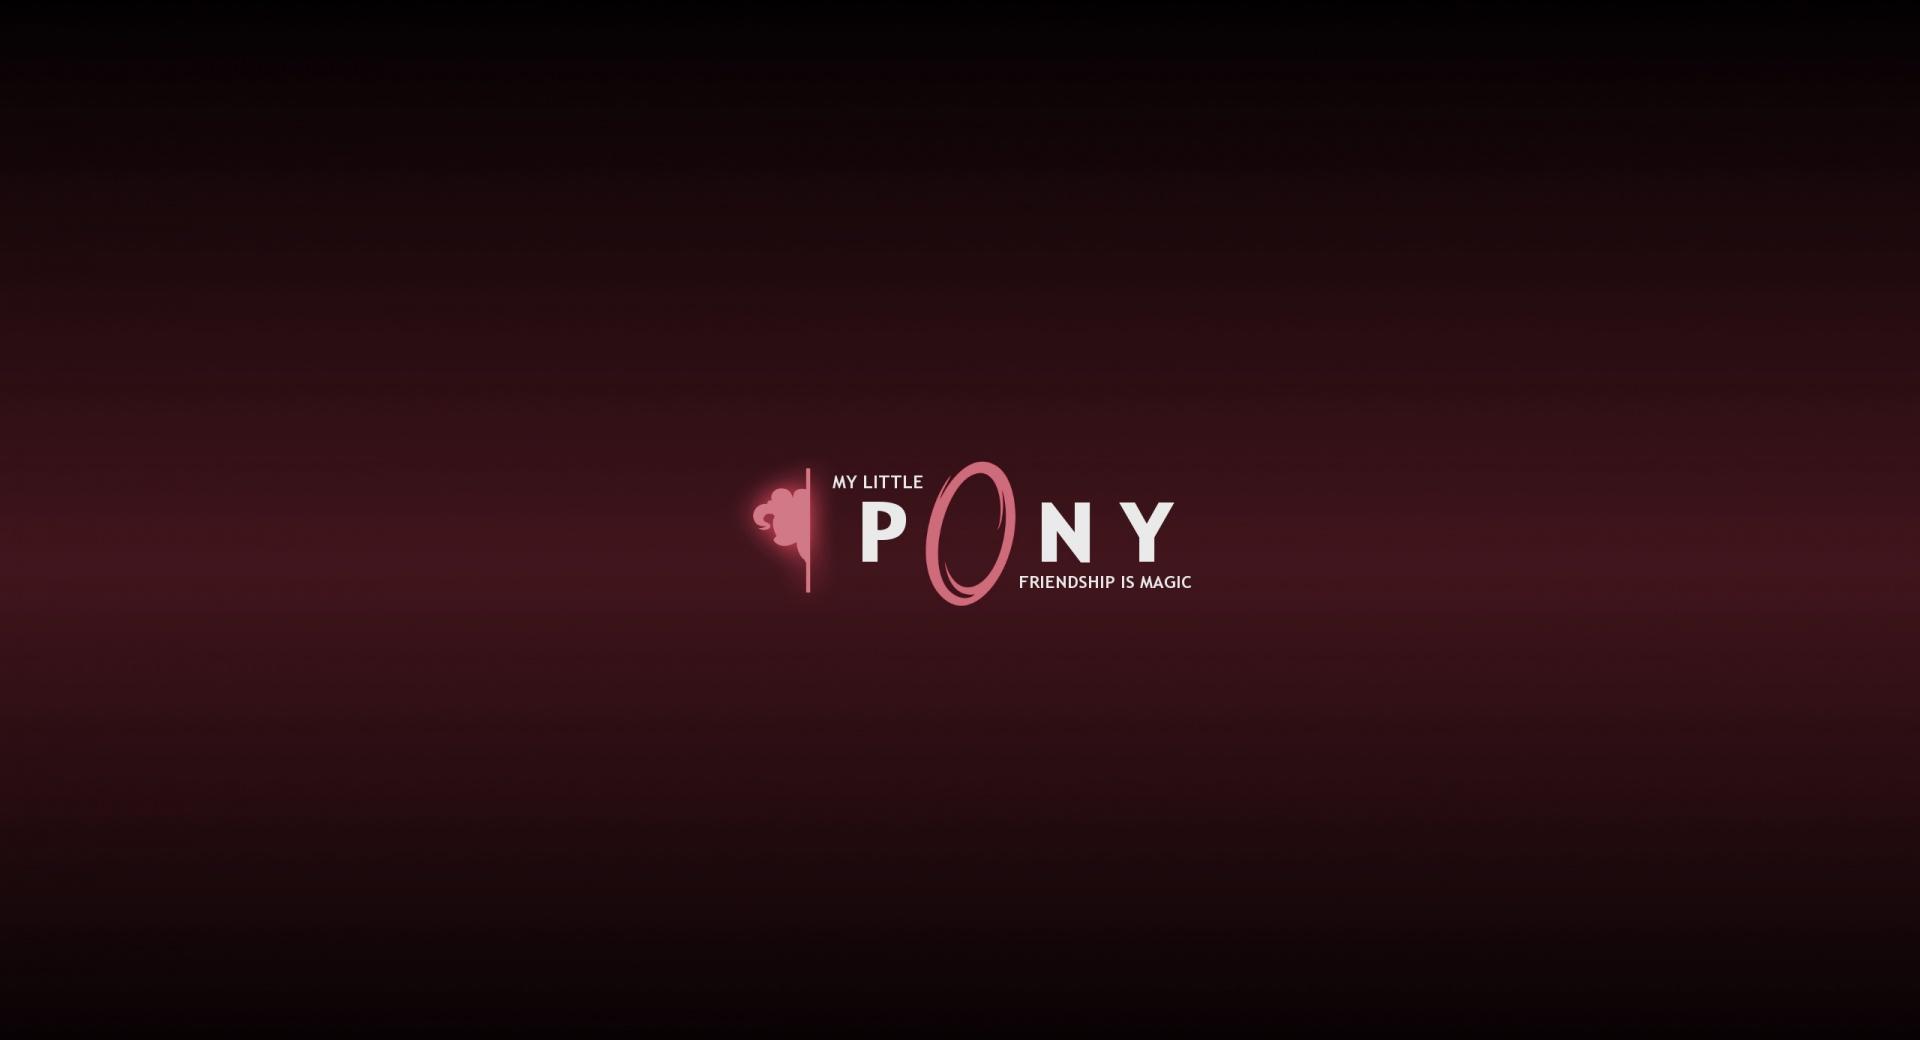 Portal Pony at 1024 x 1024 iPad size wallpapers HD quality